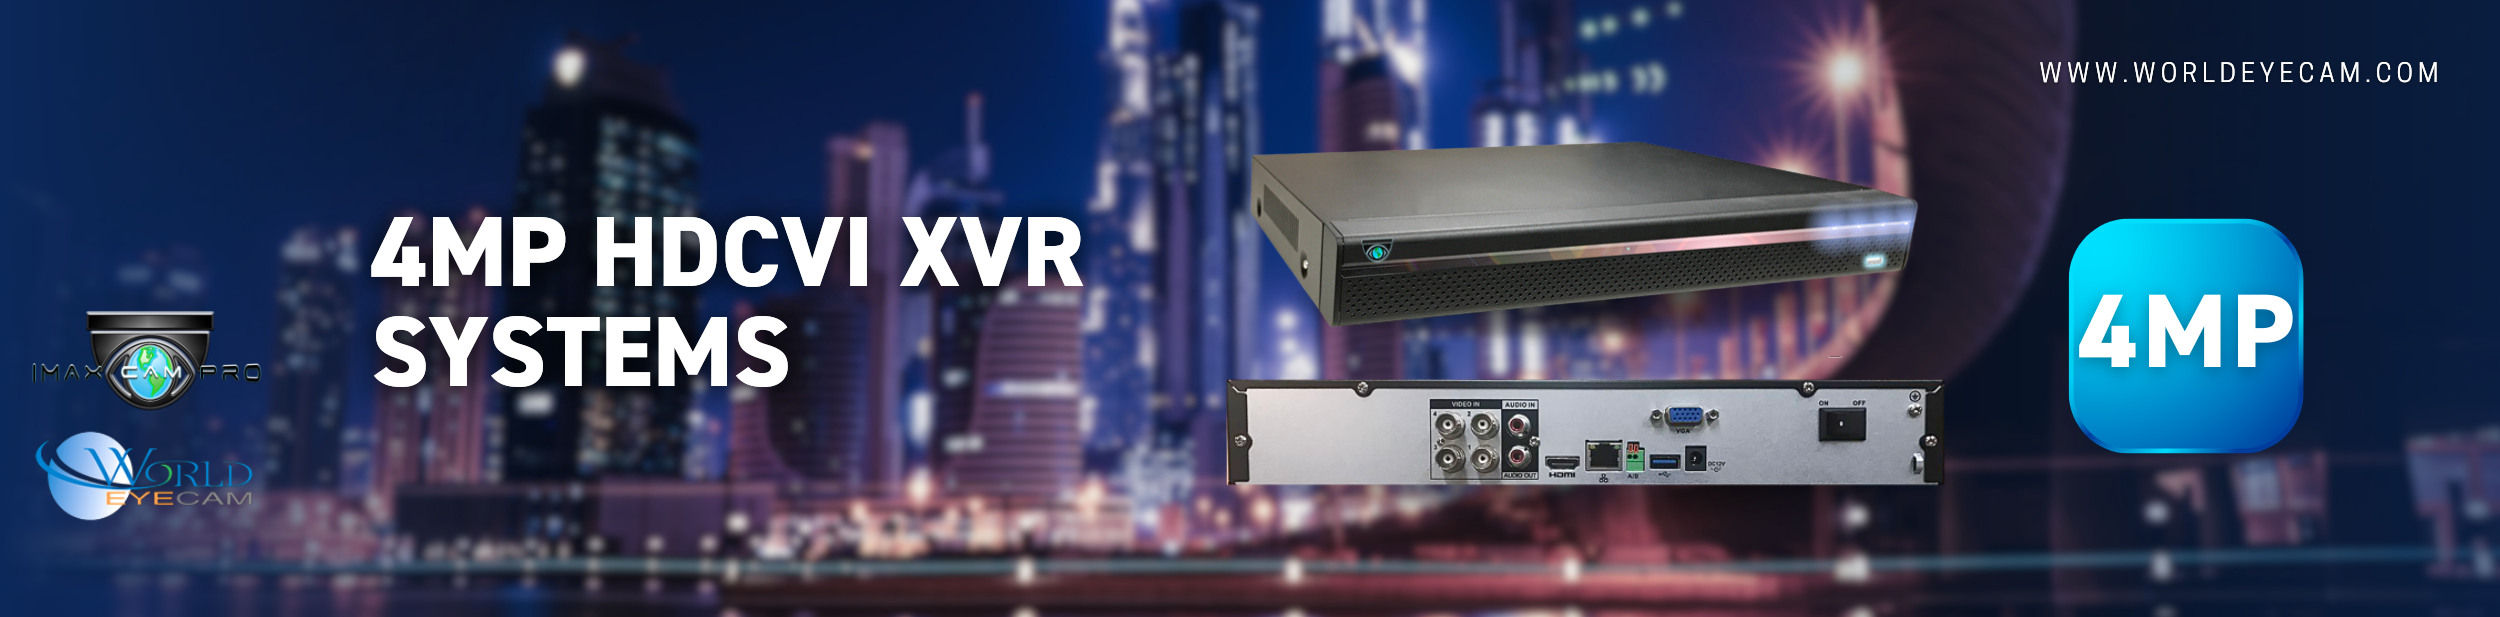 4MP HDCVI XVR Systems